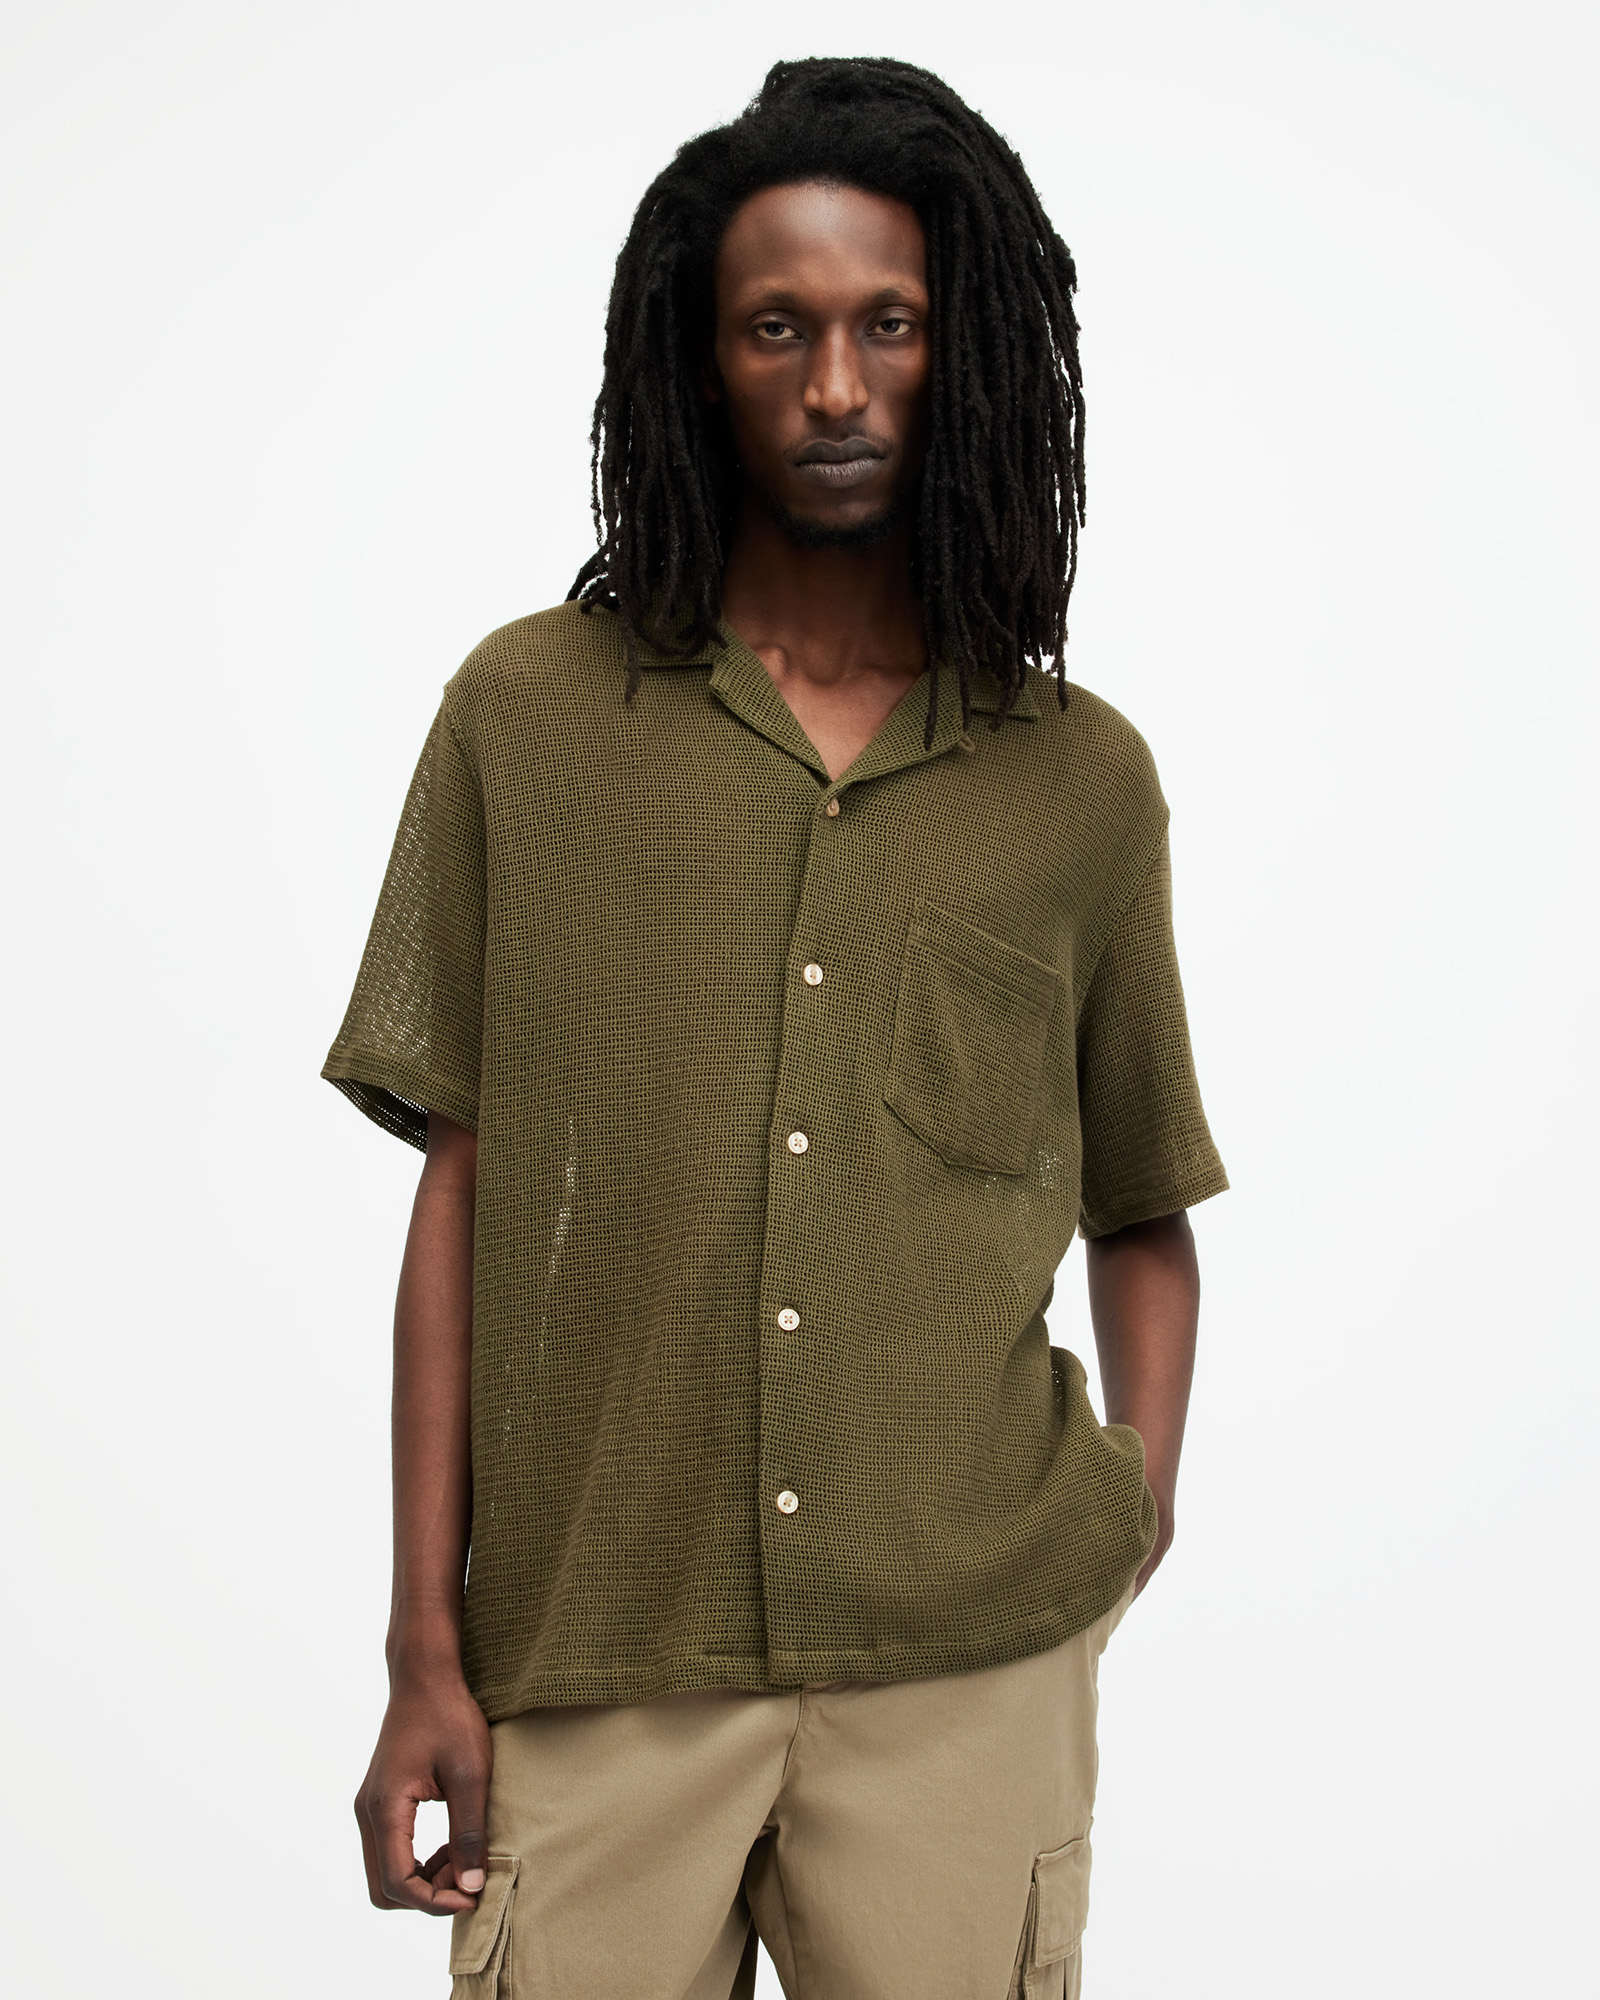 AllSaints Sortie Textured Relaxed Fit Shirt,, ASH KHAKI GREEN